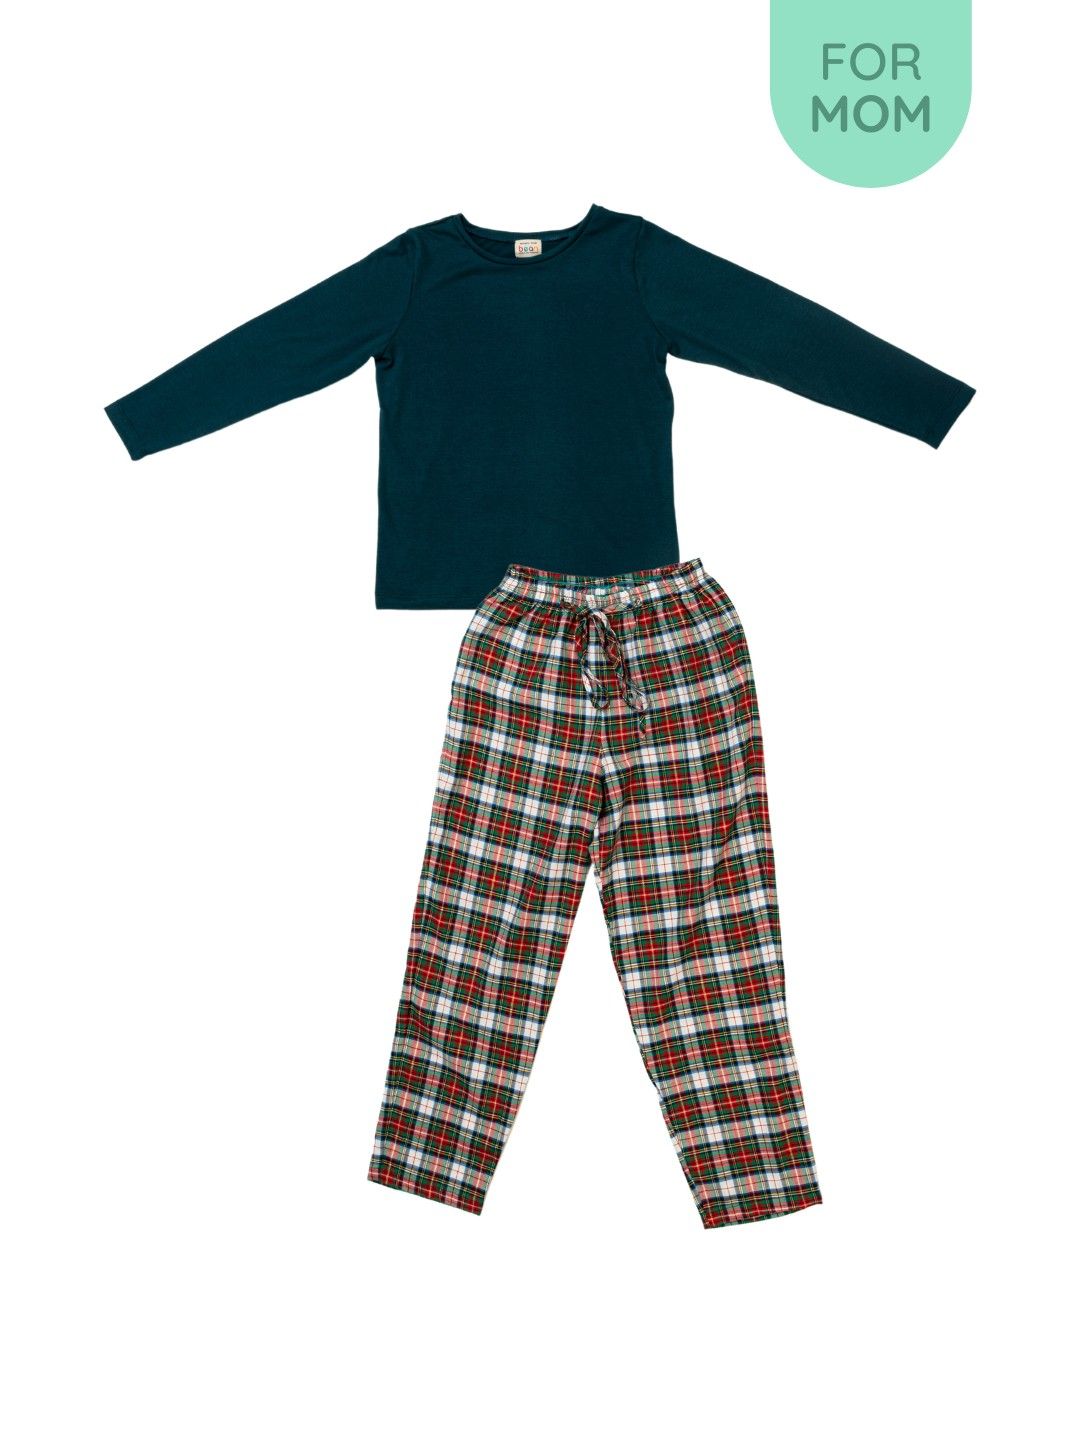 bean fashion Blue Green Plaid Sleep Pajama Set for Mom (No Color- Image 1)